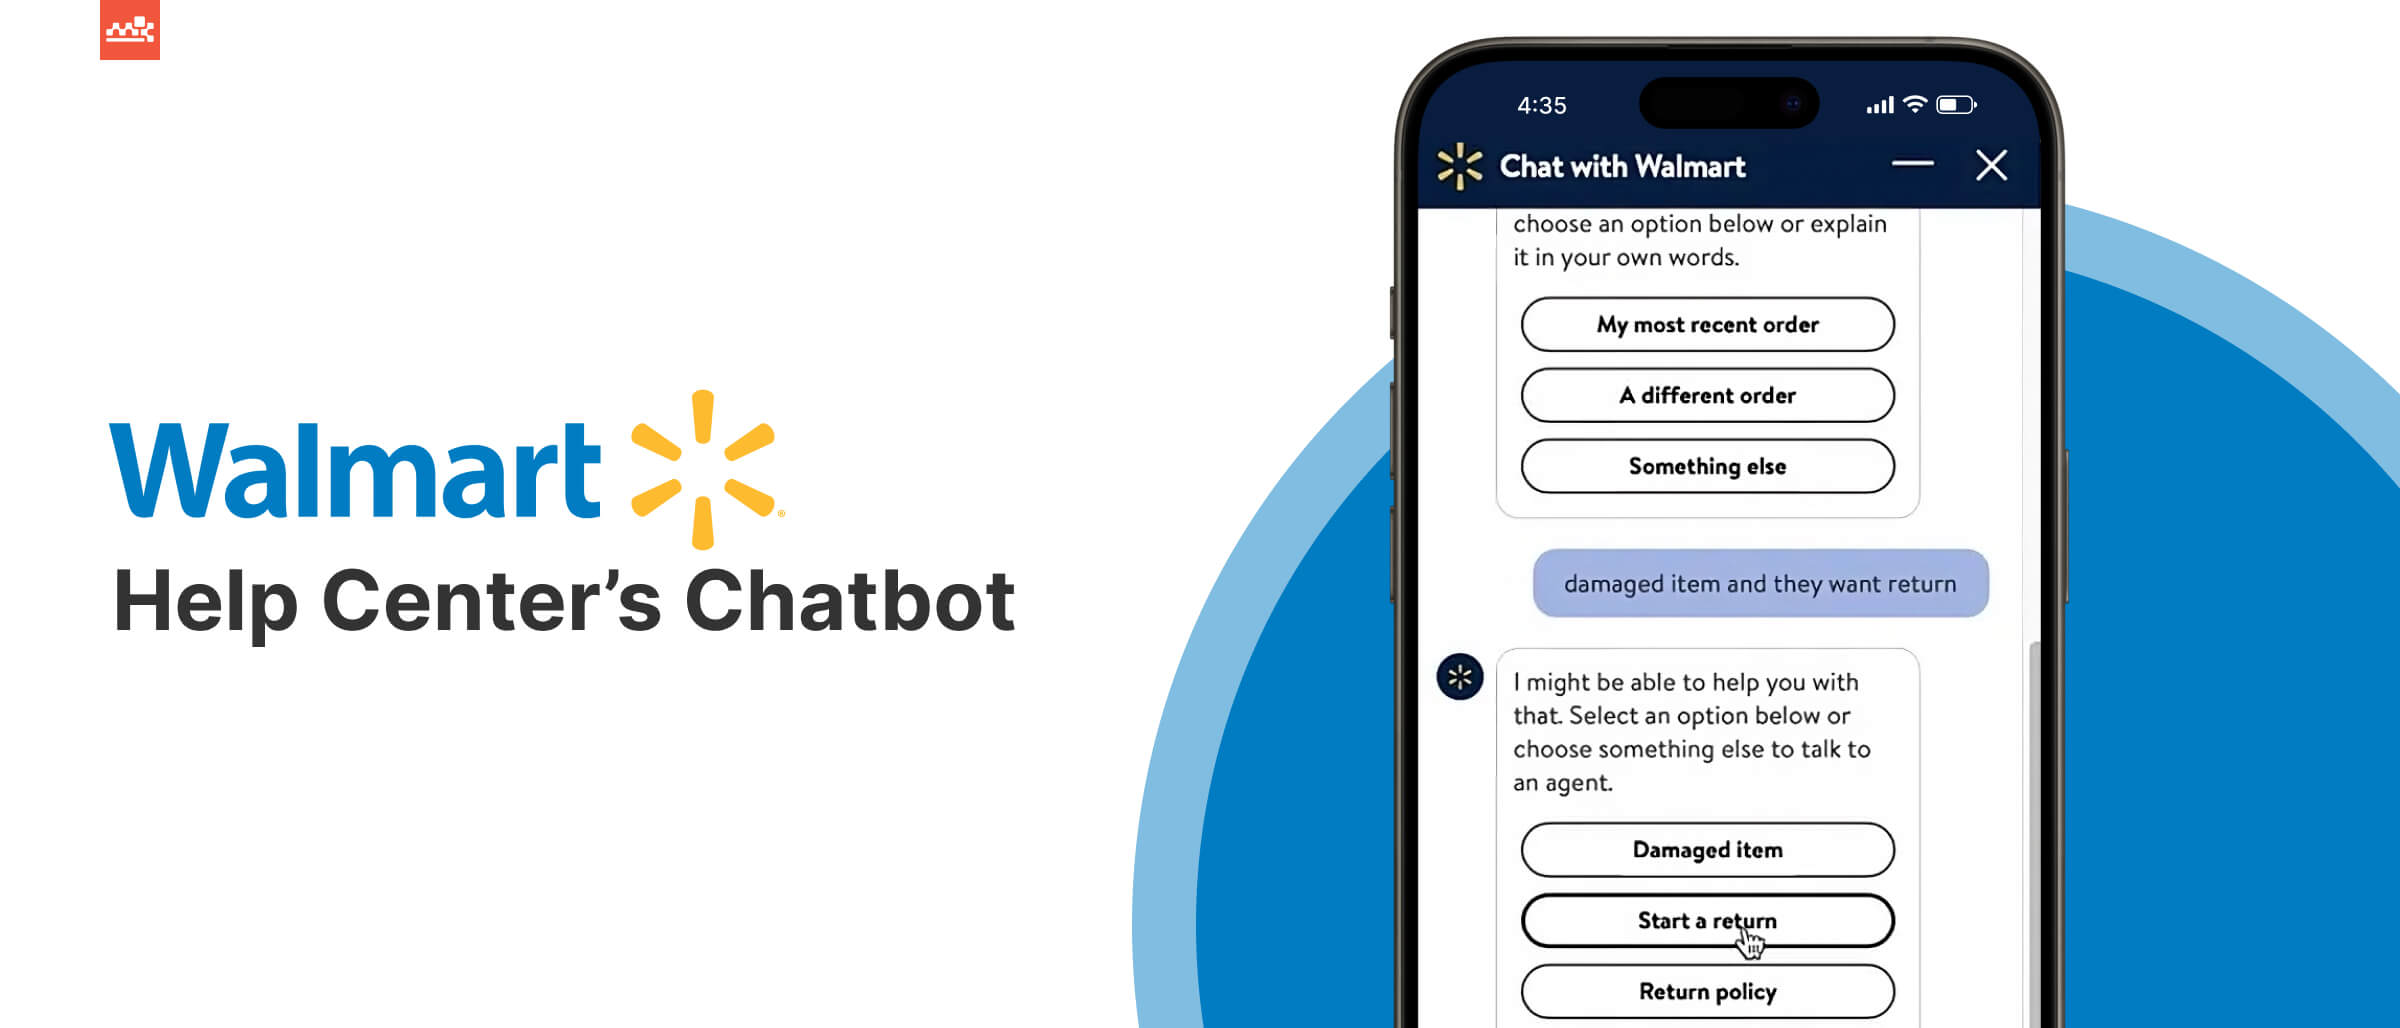 Walmart Help Center Chatbot